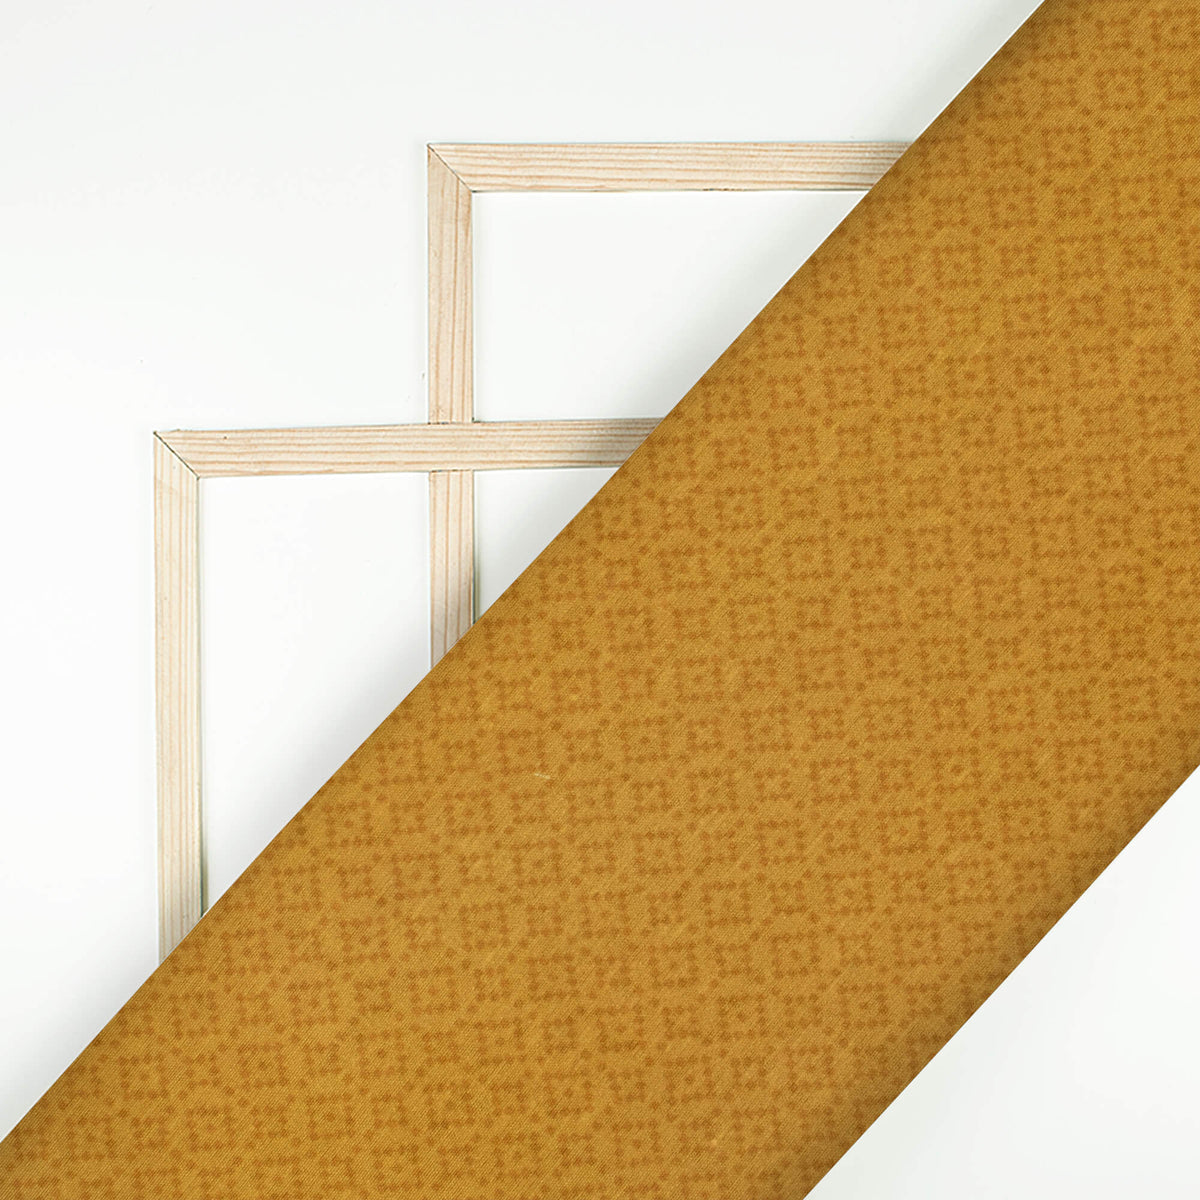 Dijon Yellow Geometric Digital Print Suhana Chanderi Fabric(Width 56 Inches)